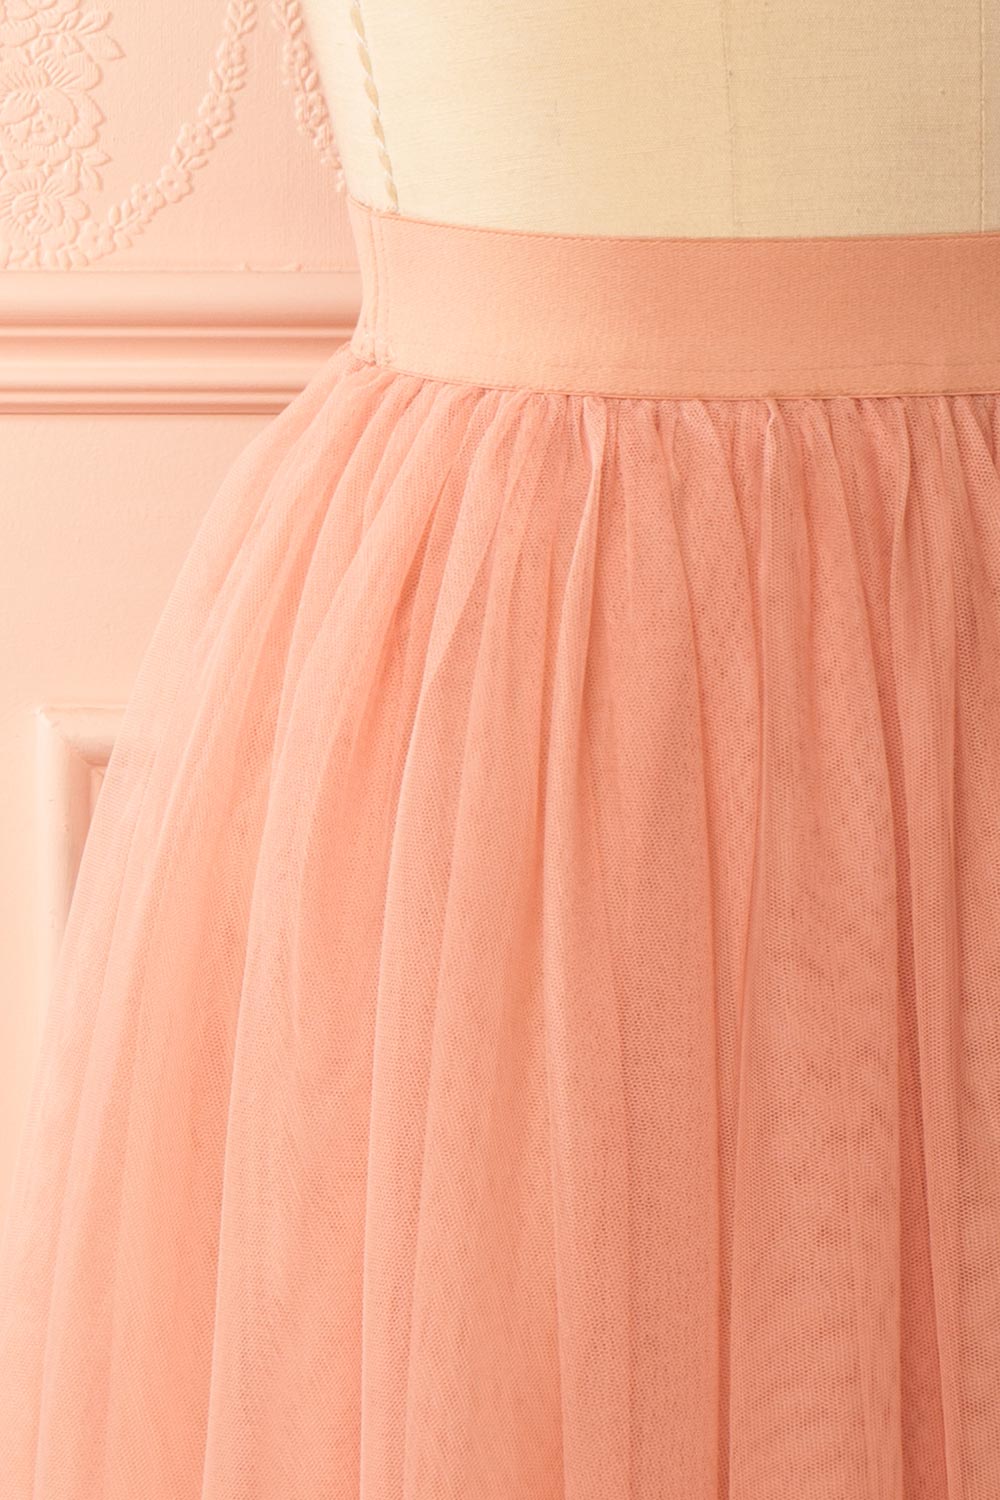 Aurelia Rose Light Pink Tulle Skirt | Boutique 1861 4